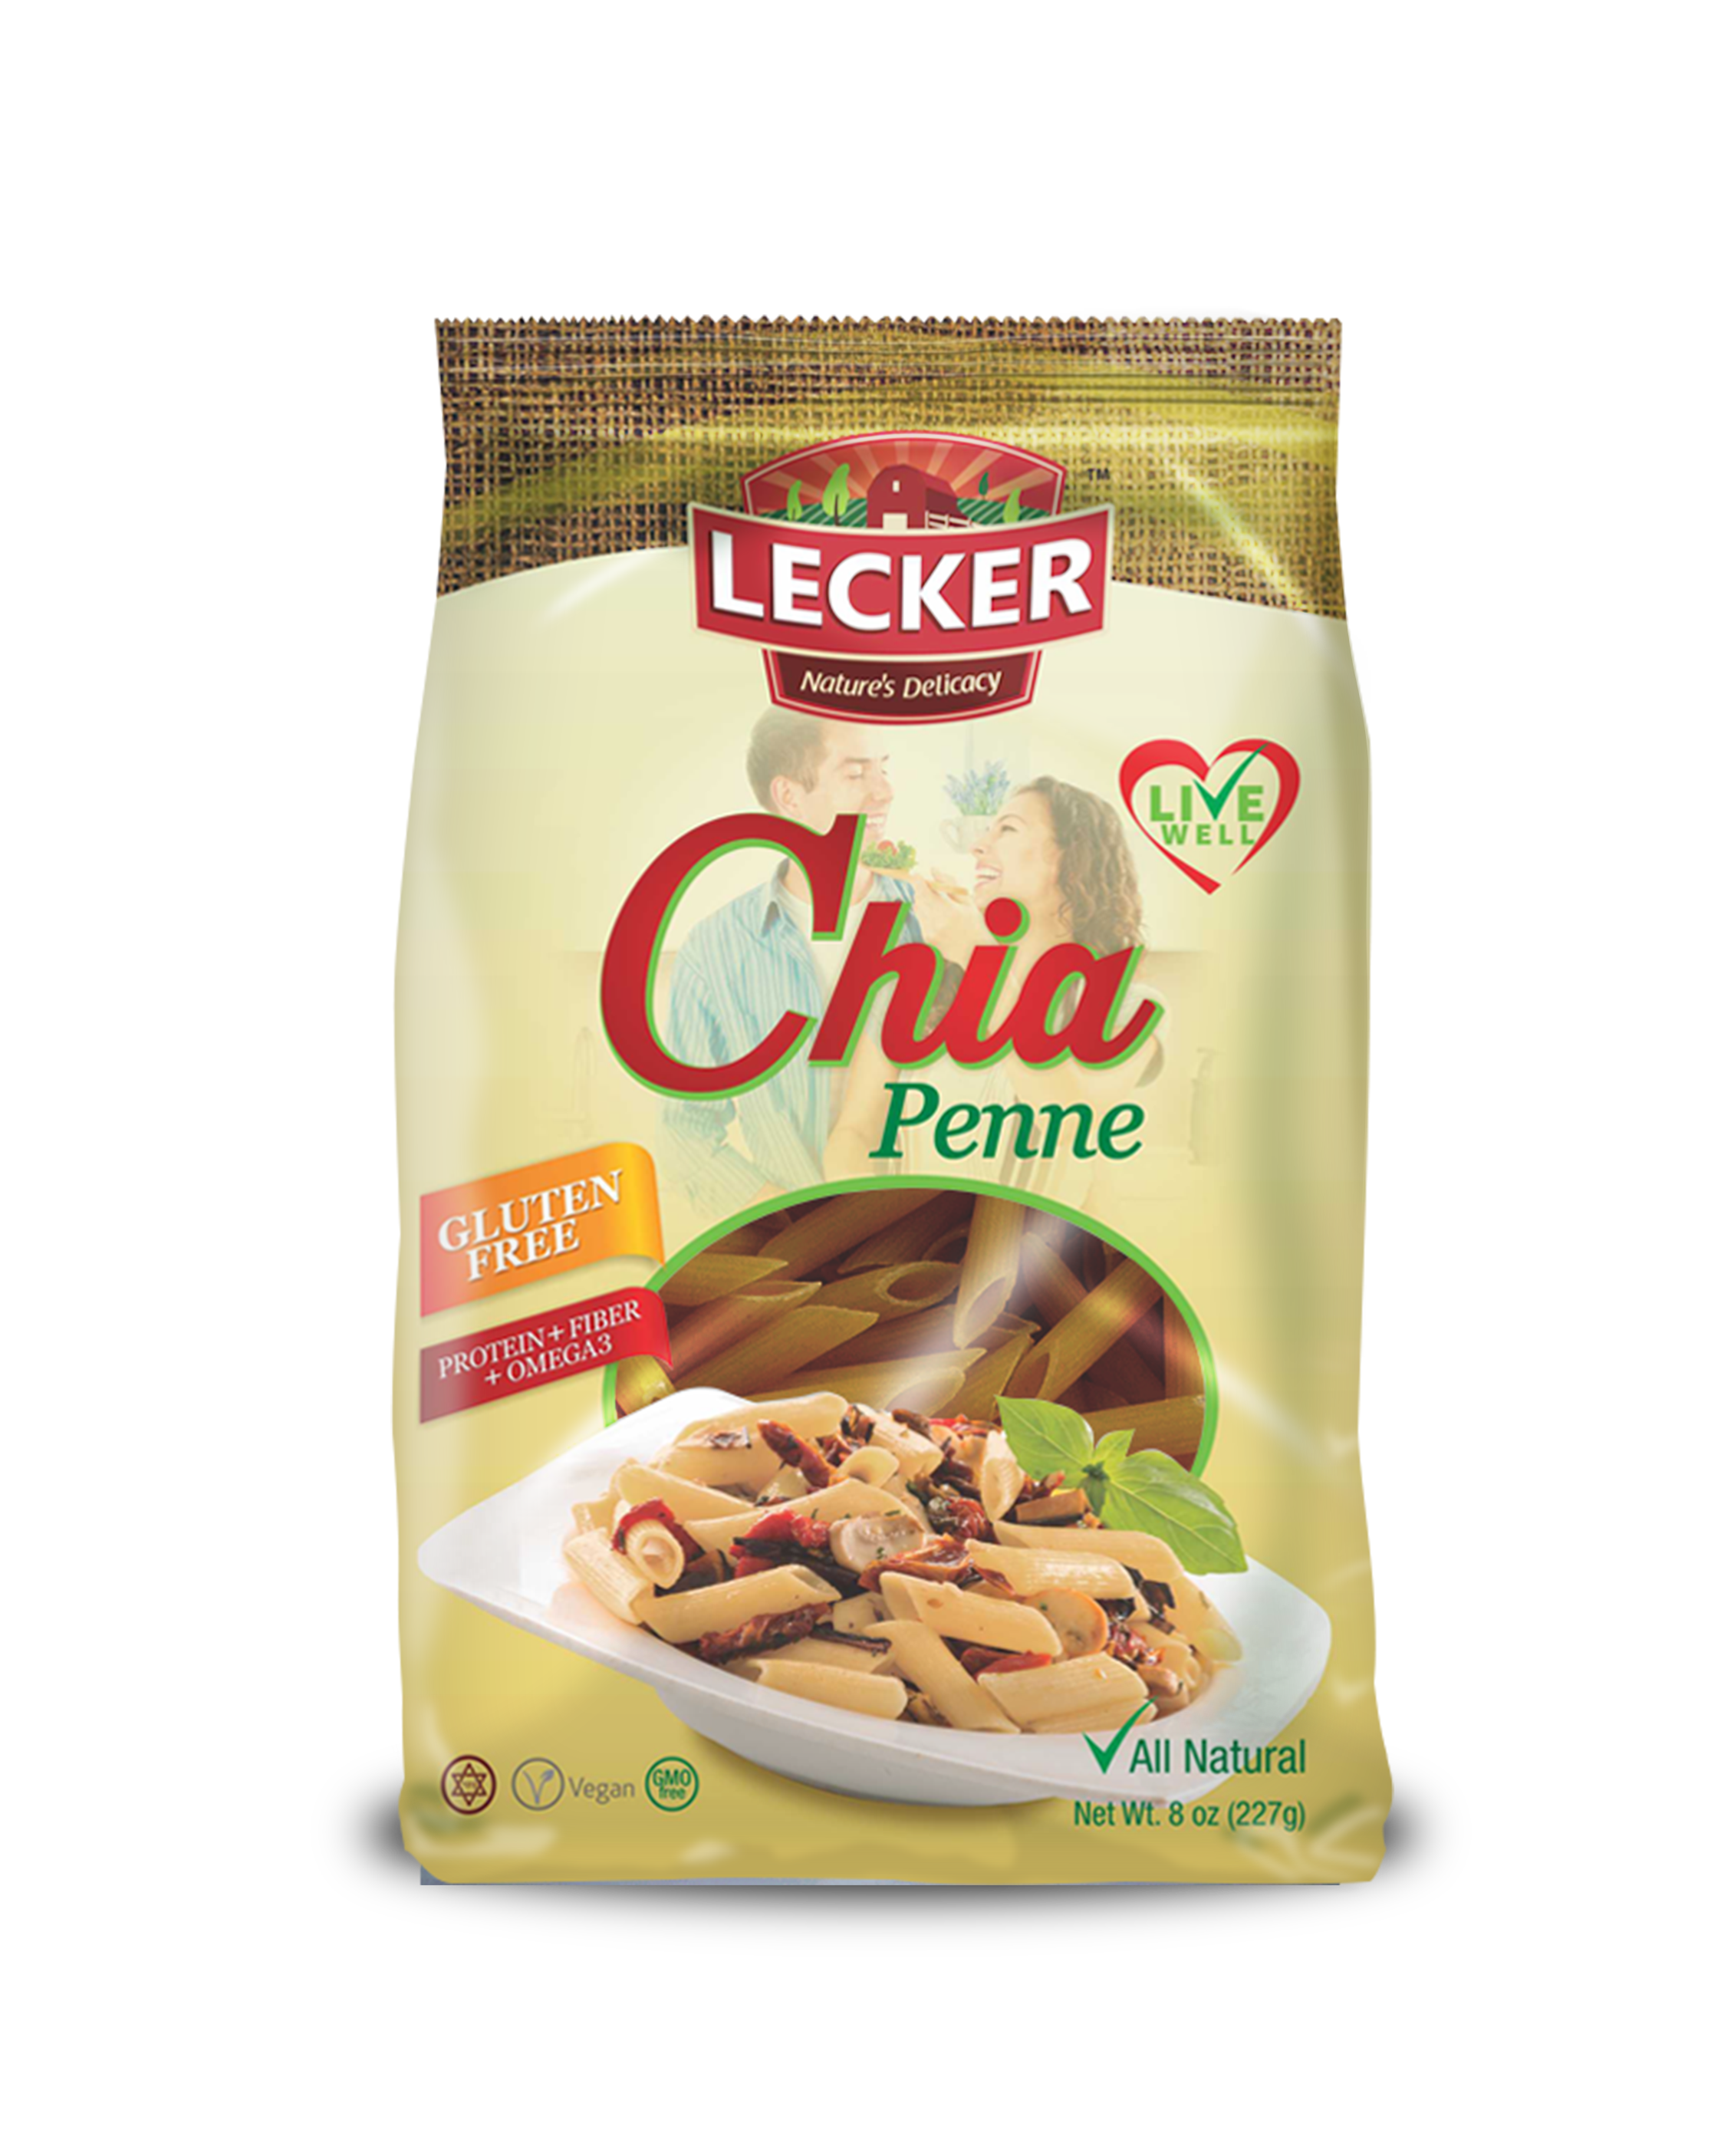 LECKER Penne Chia Pasta is Gluten Free, Non-GMO, Vegan, Kosher by Tile World Corp.